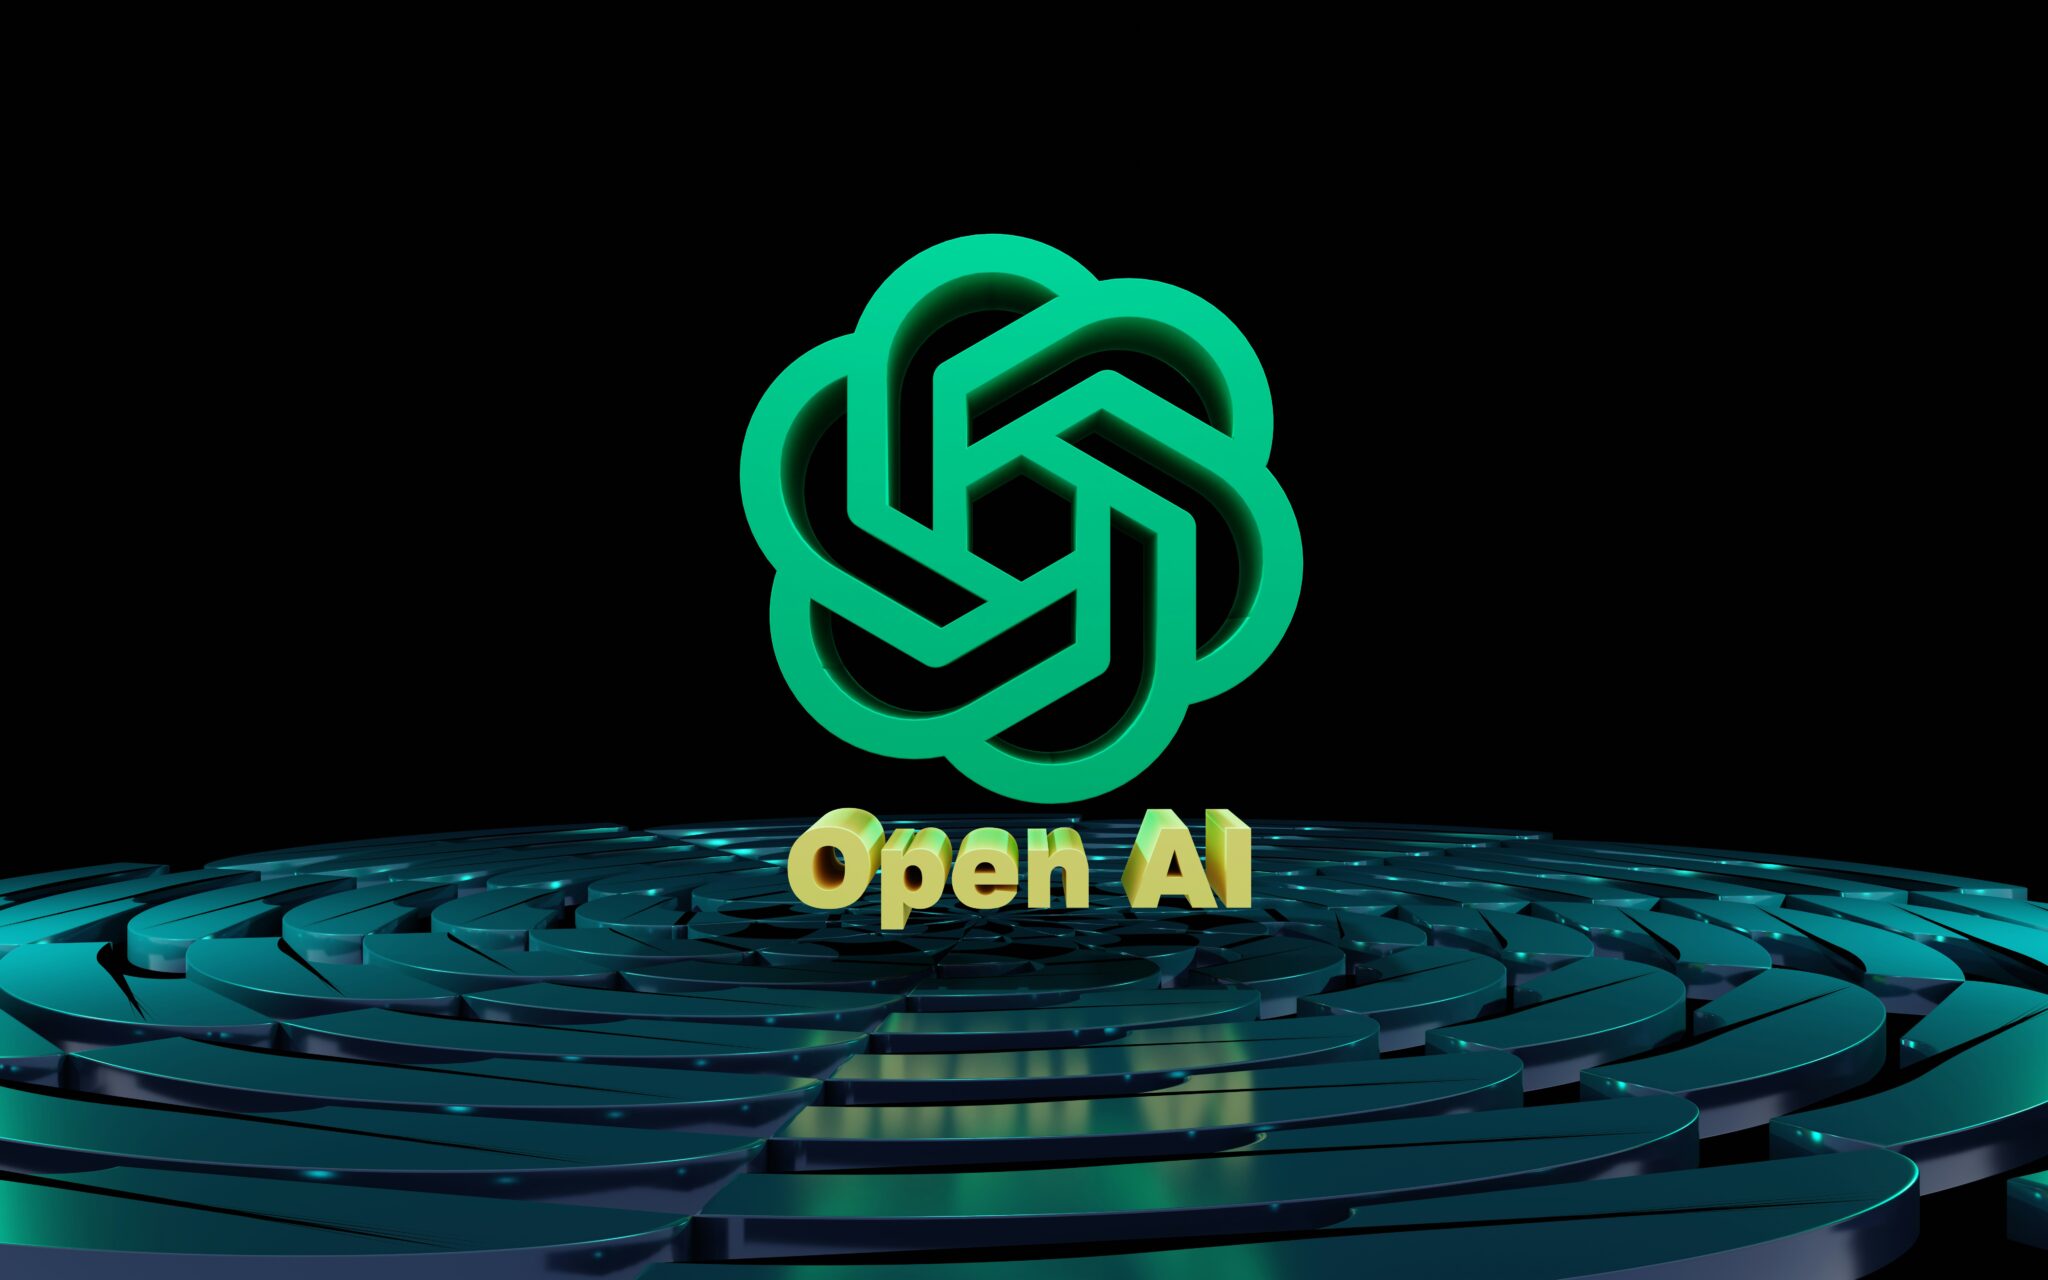 Green open AI logo hovers over dark landscape.